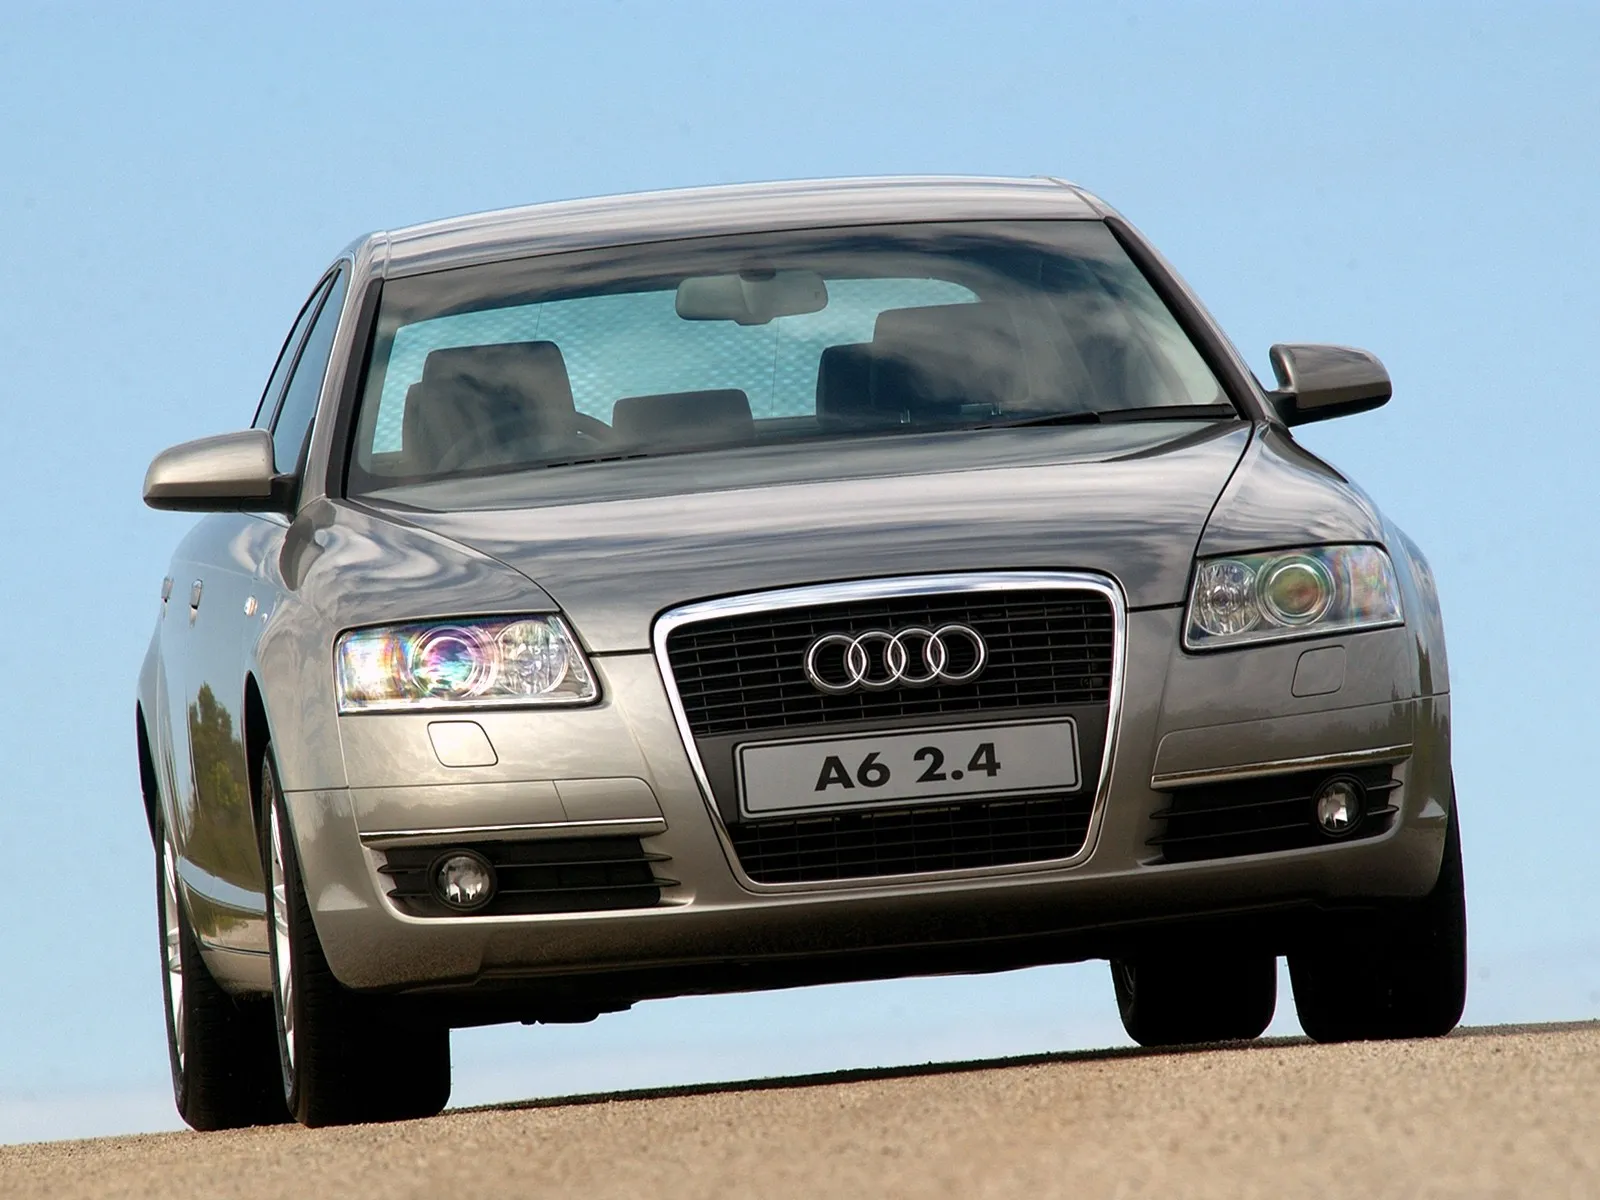 Audi A6 2.4 2008 photo - 6